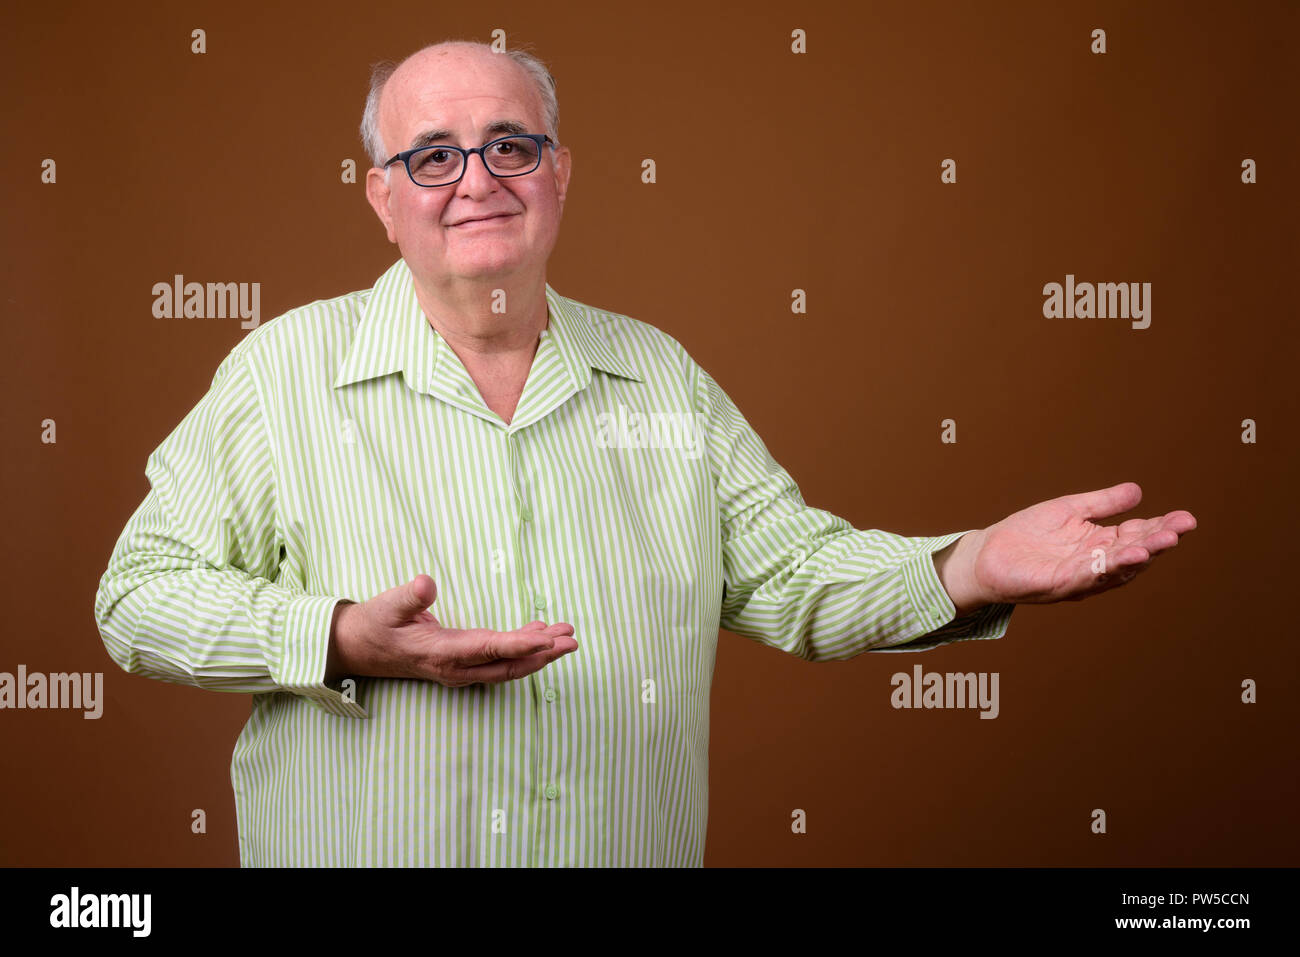 Overweight senior man wearing eyeglasses against brown backgroun Stock Photo